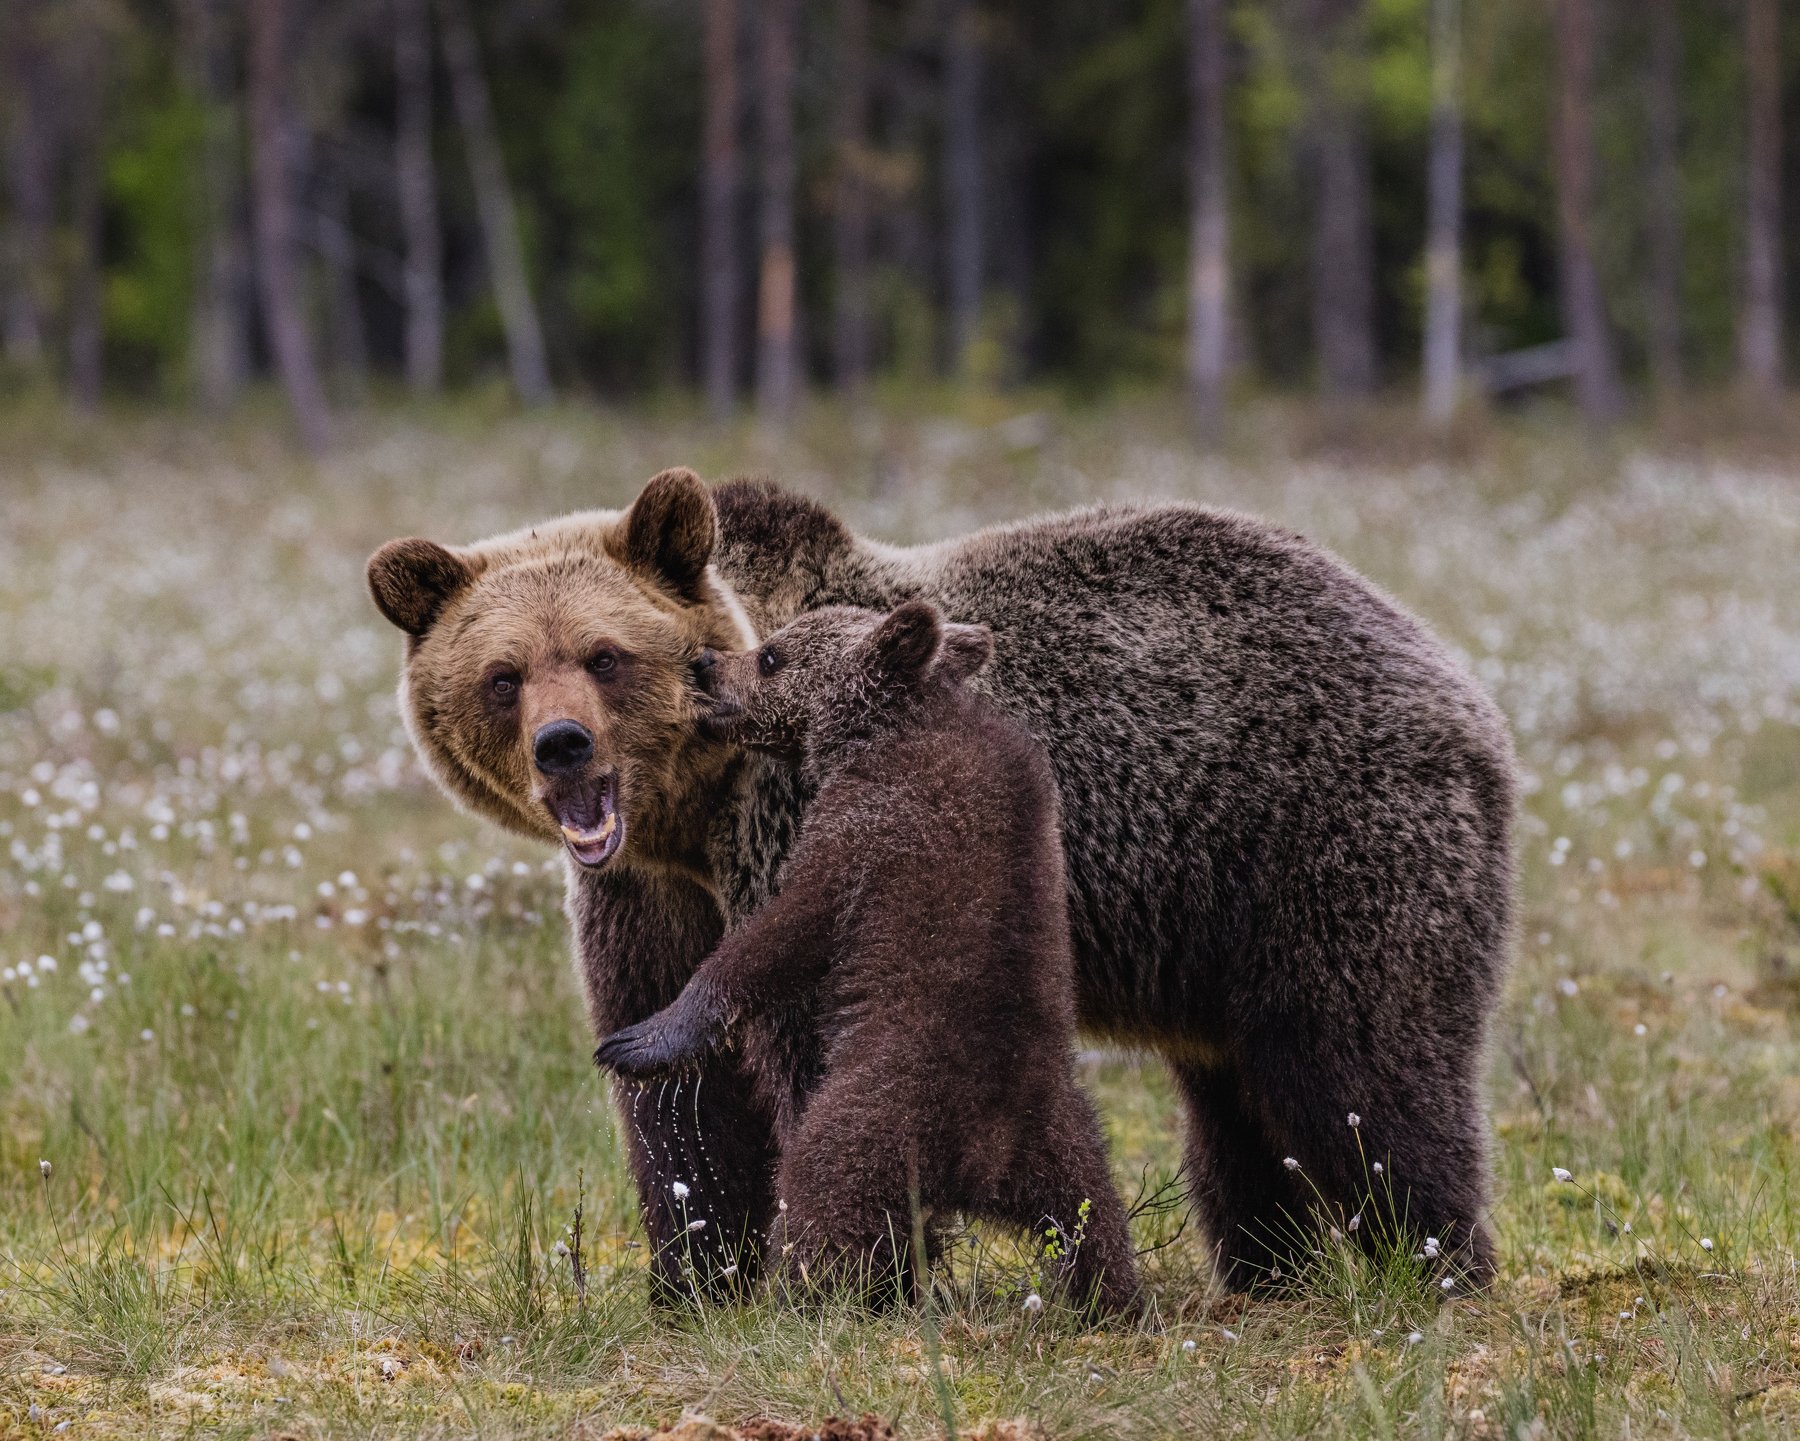 Ч бурый медведь. Гризли североамериканский бурый медведь. Северная Америка медведь Гризли. Бурый медведь косолапый. Аляскинский бурый медведь.